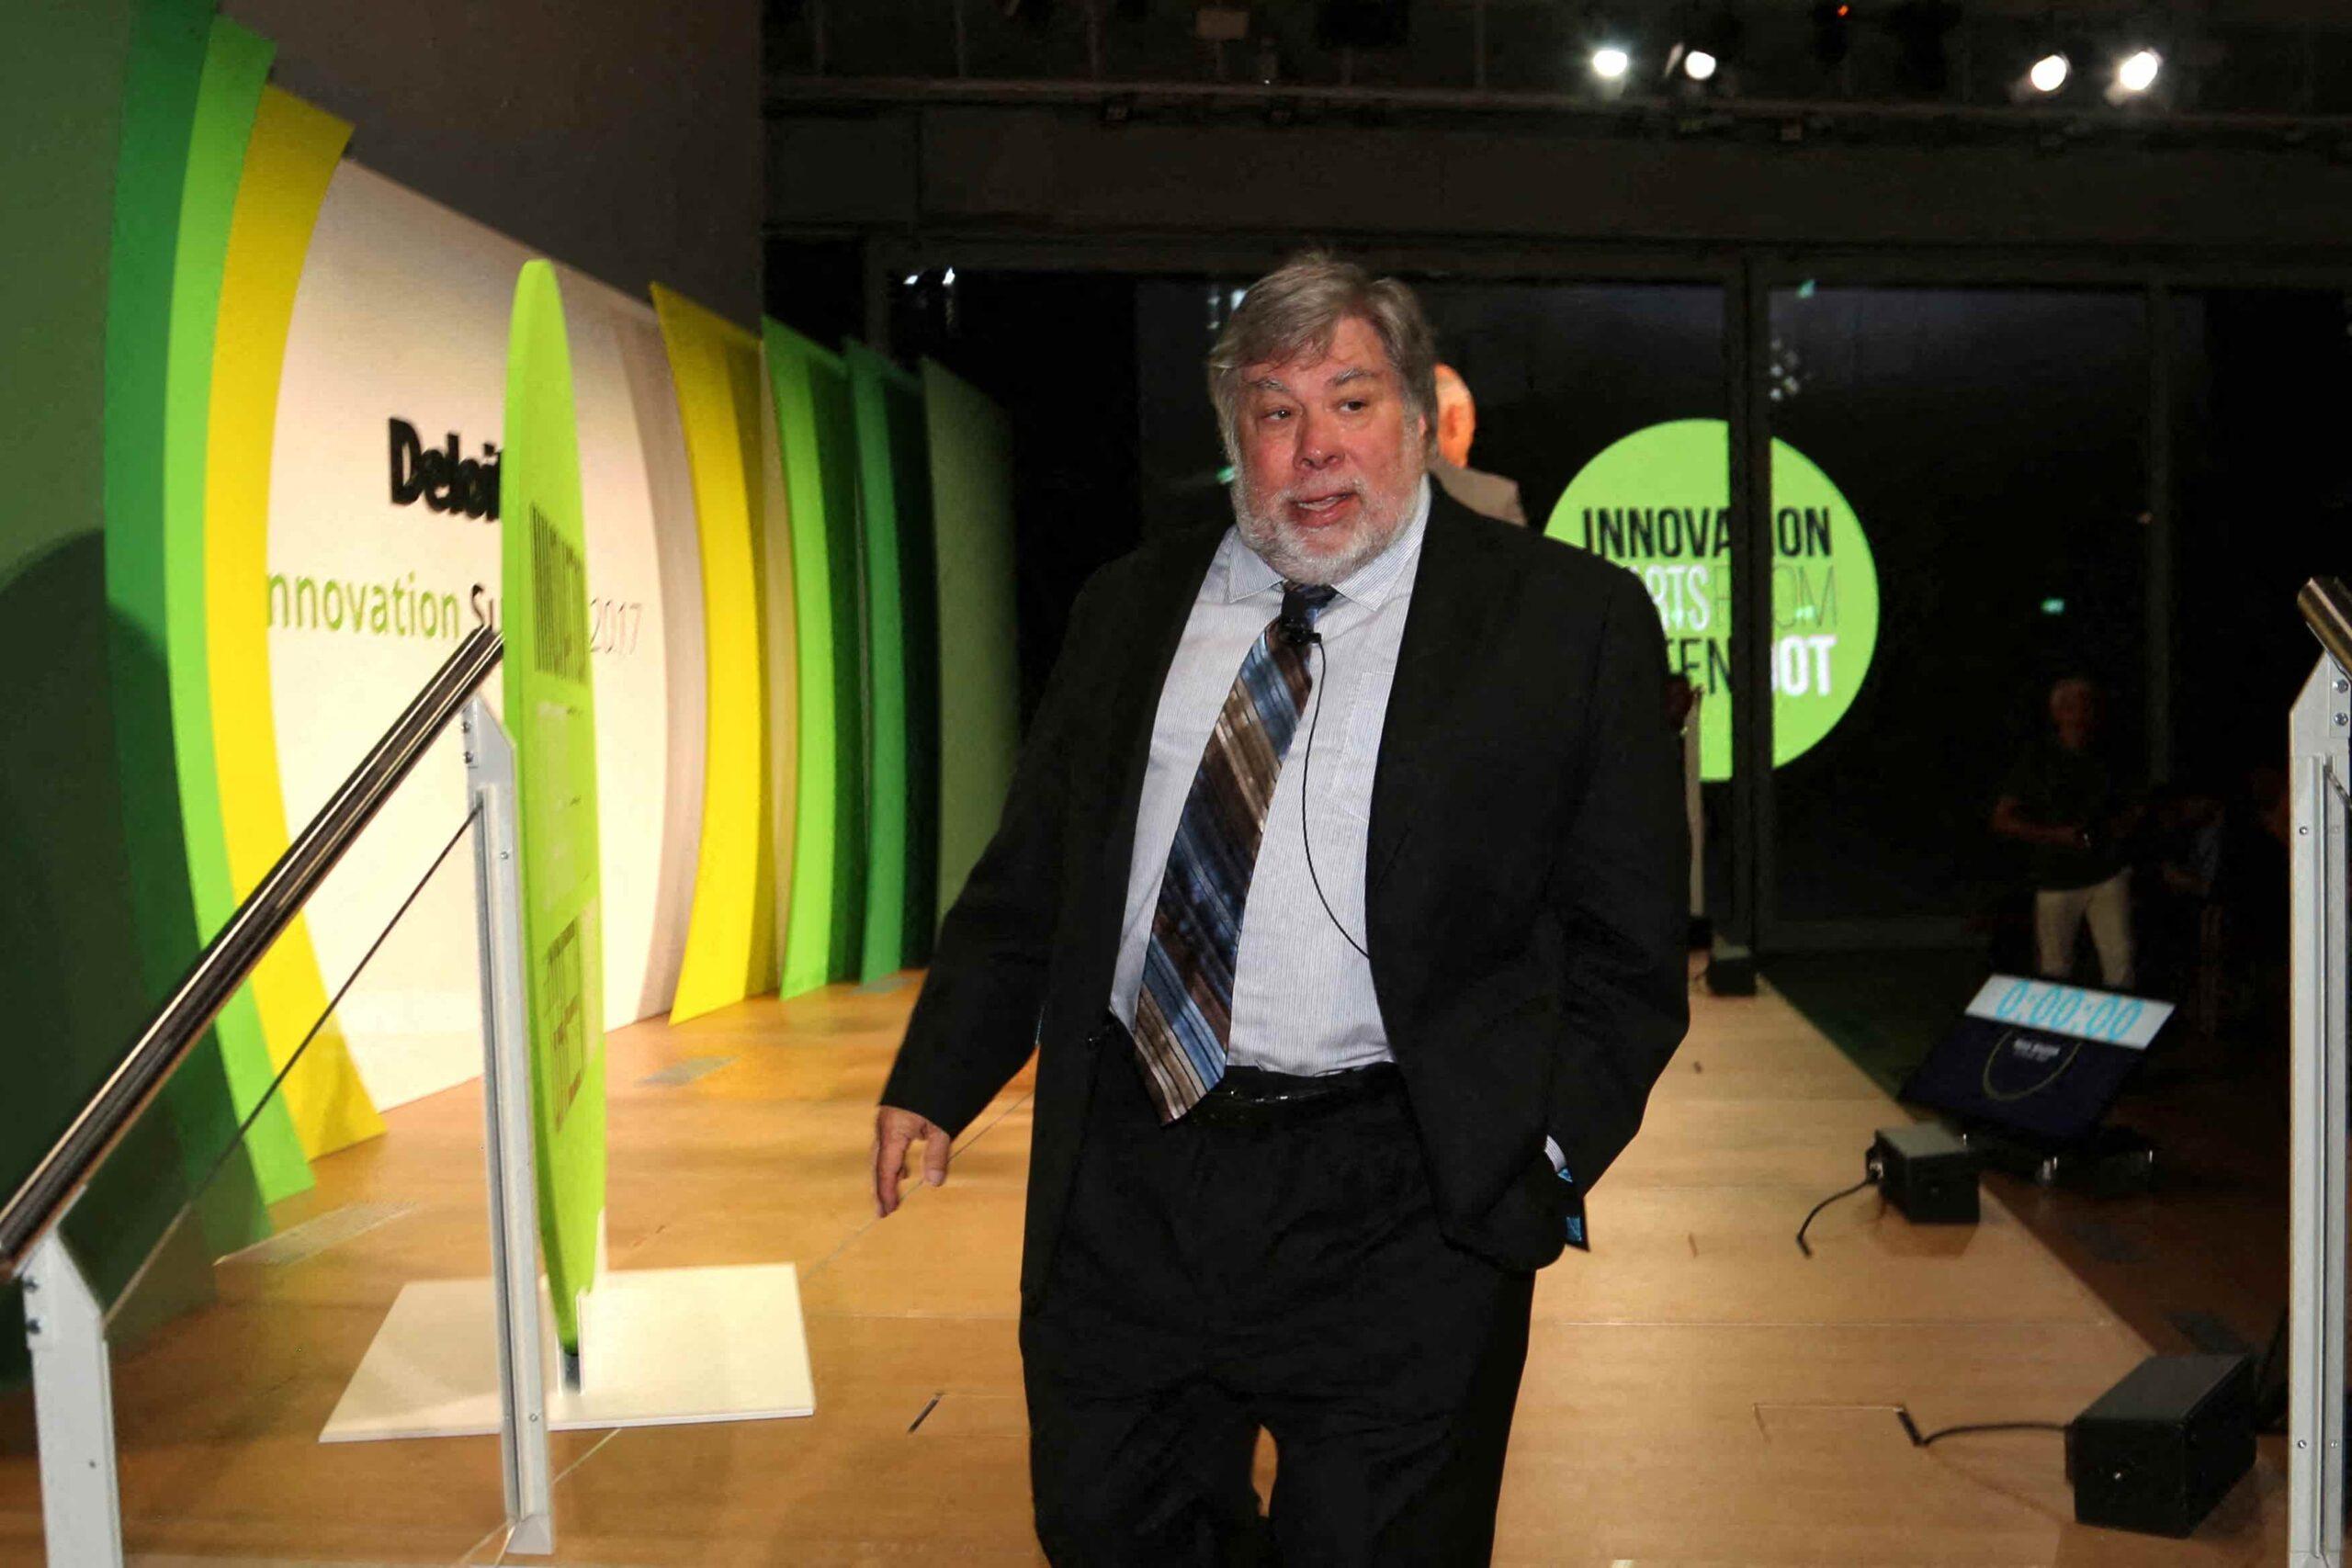 Apple Co-Founder Steve Wozniak Suffers Medical Emergency After Experiencing Vertigo